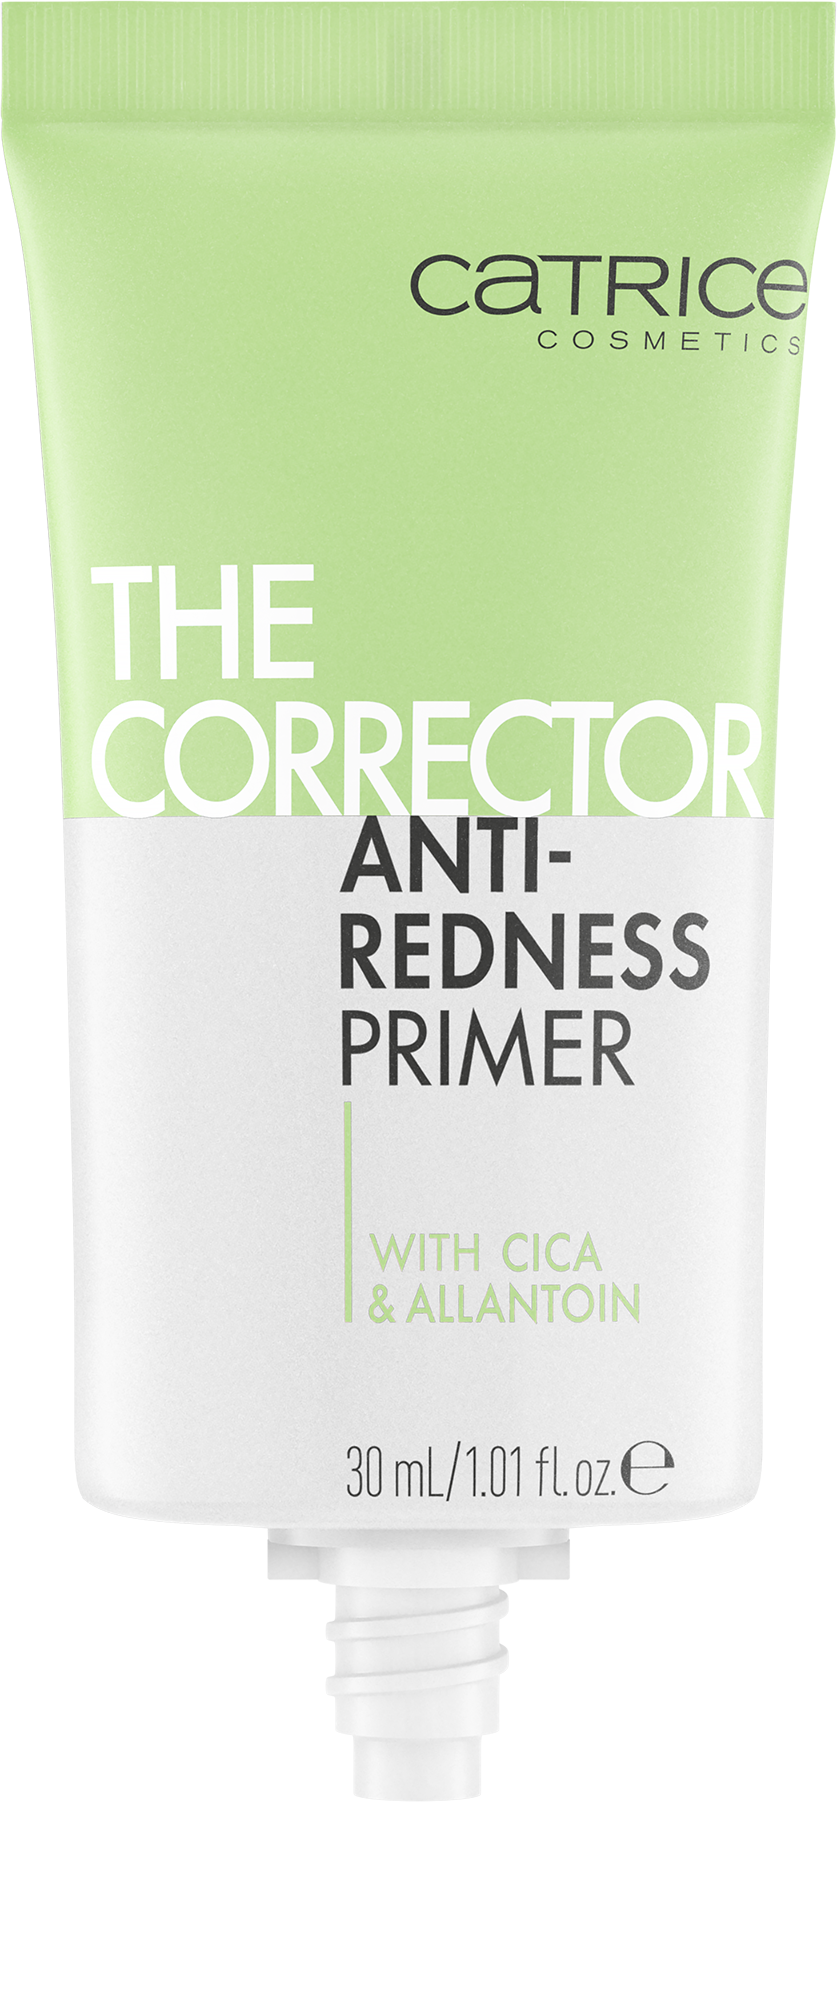 Buy CATRICE The Corrector Anti-Redness Primer online